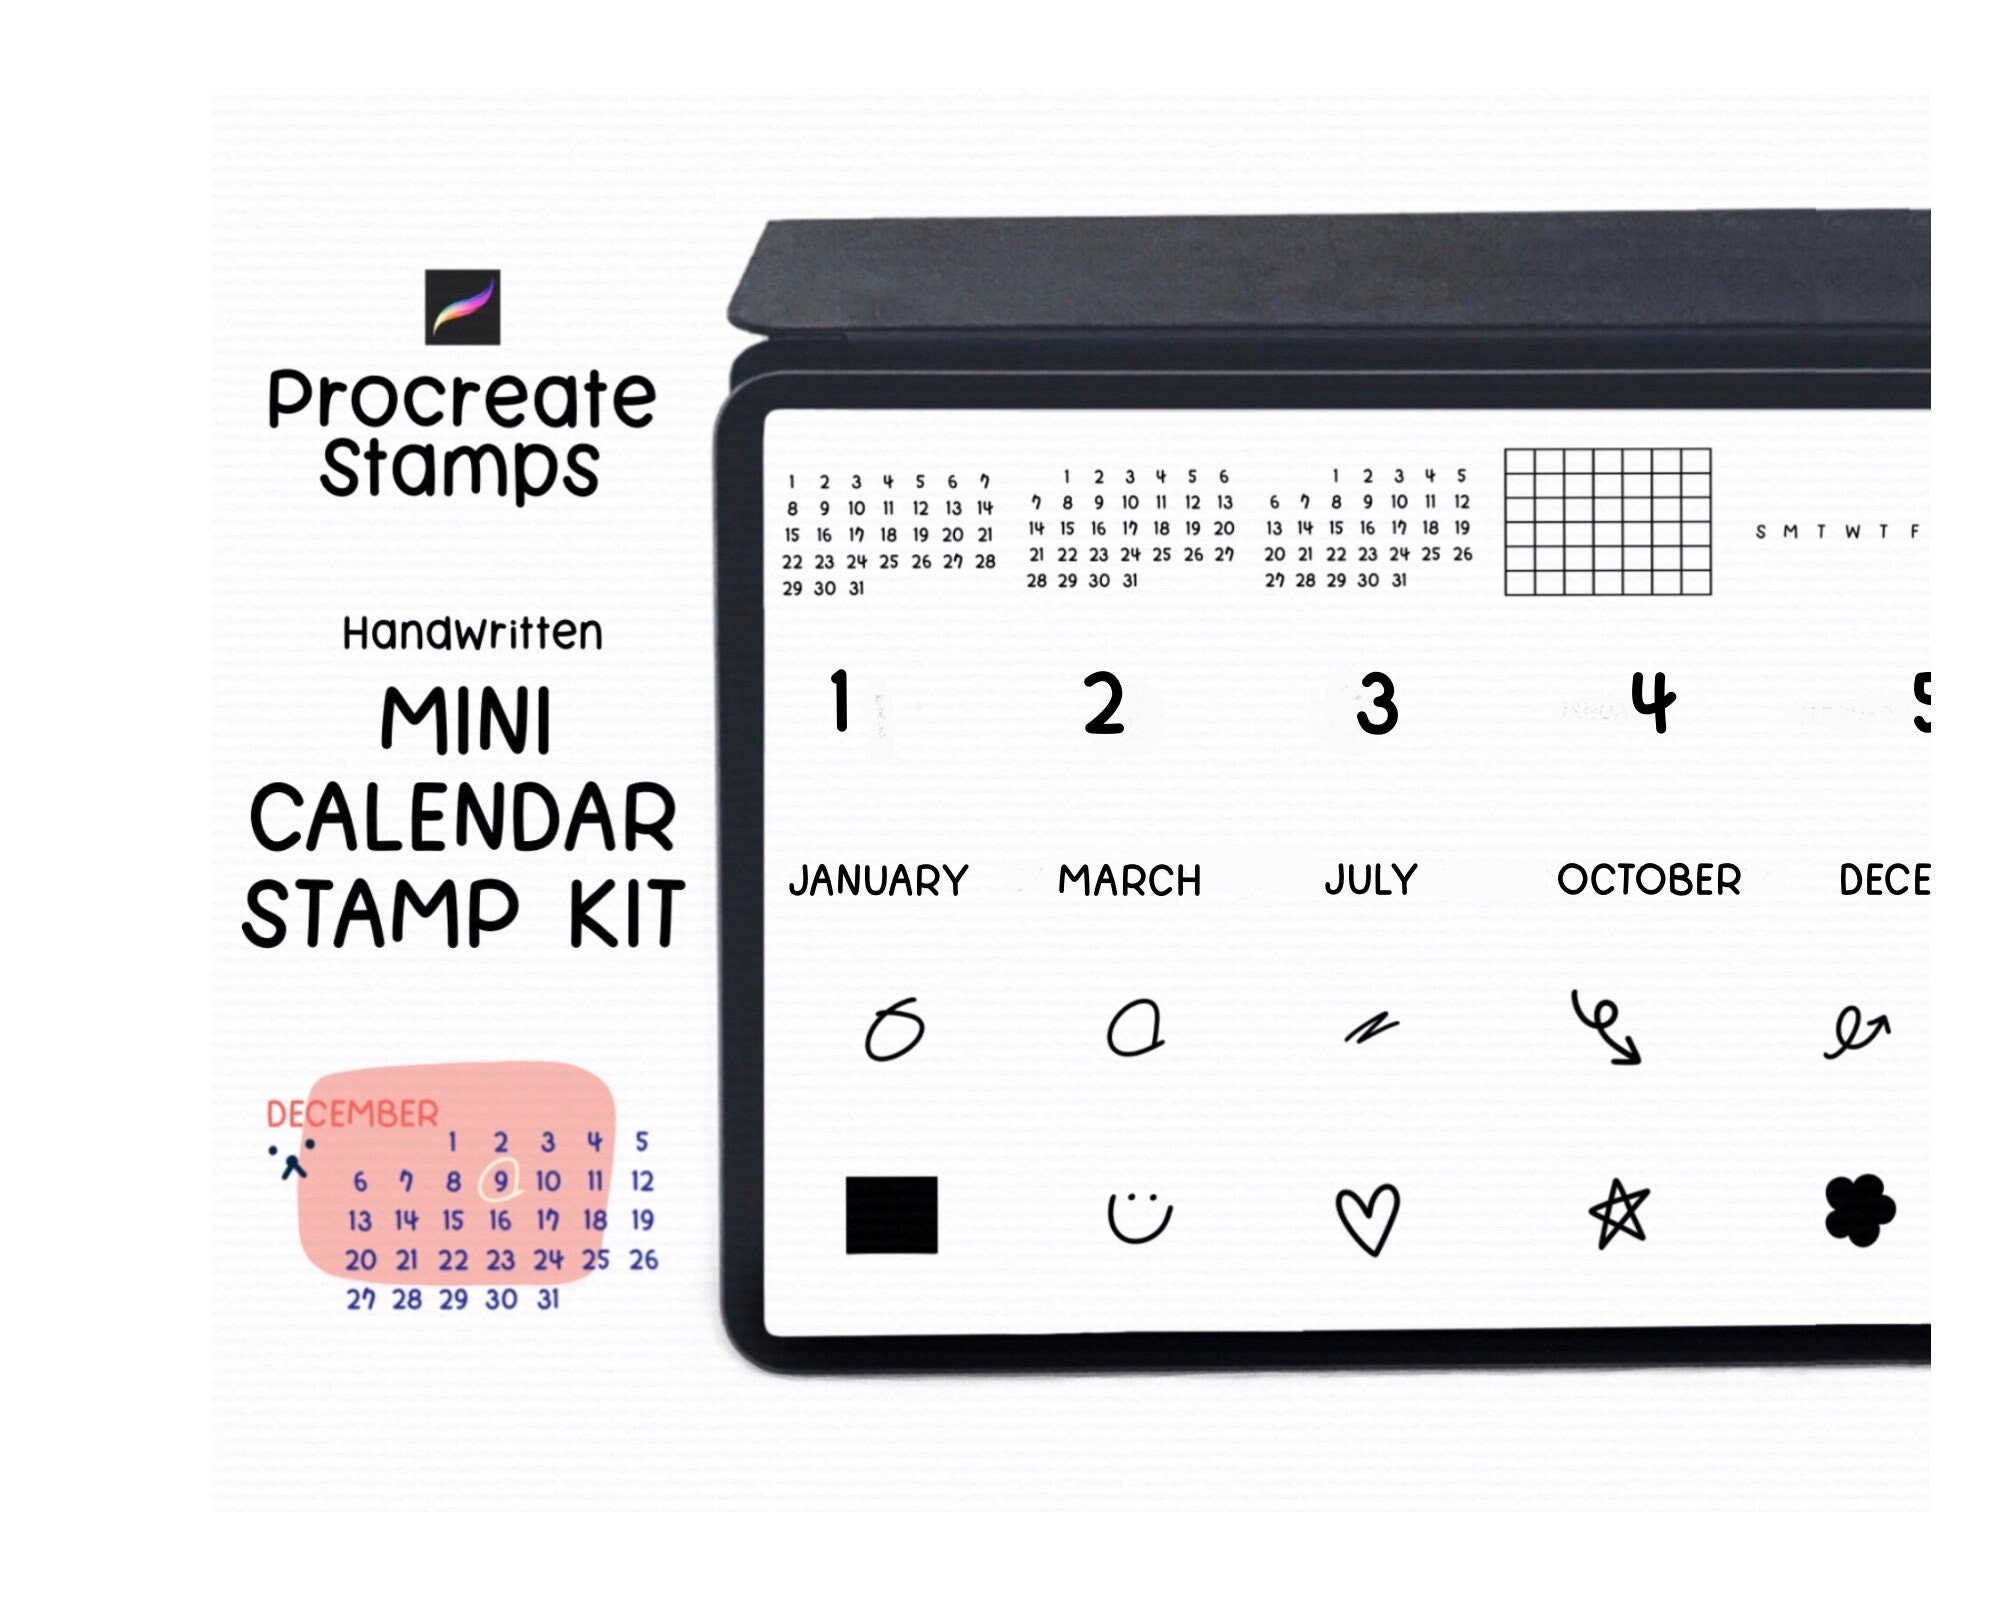 Procreate Planner Stamps Graphic by Ssolovyeva Designs · Creative Fabrica